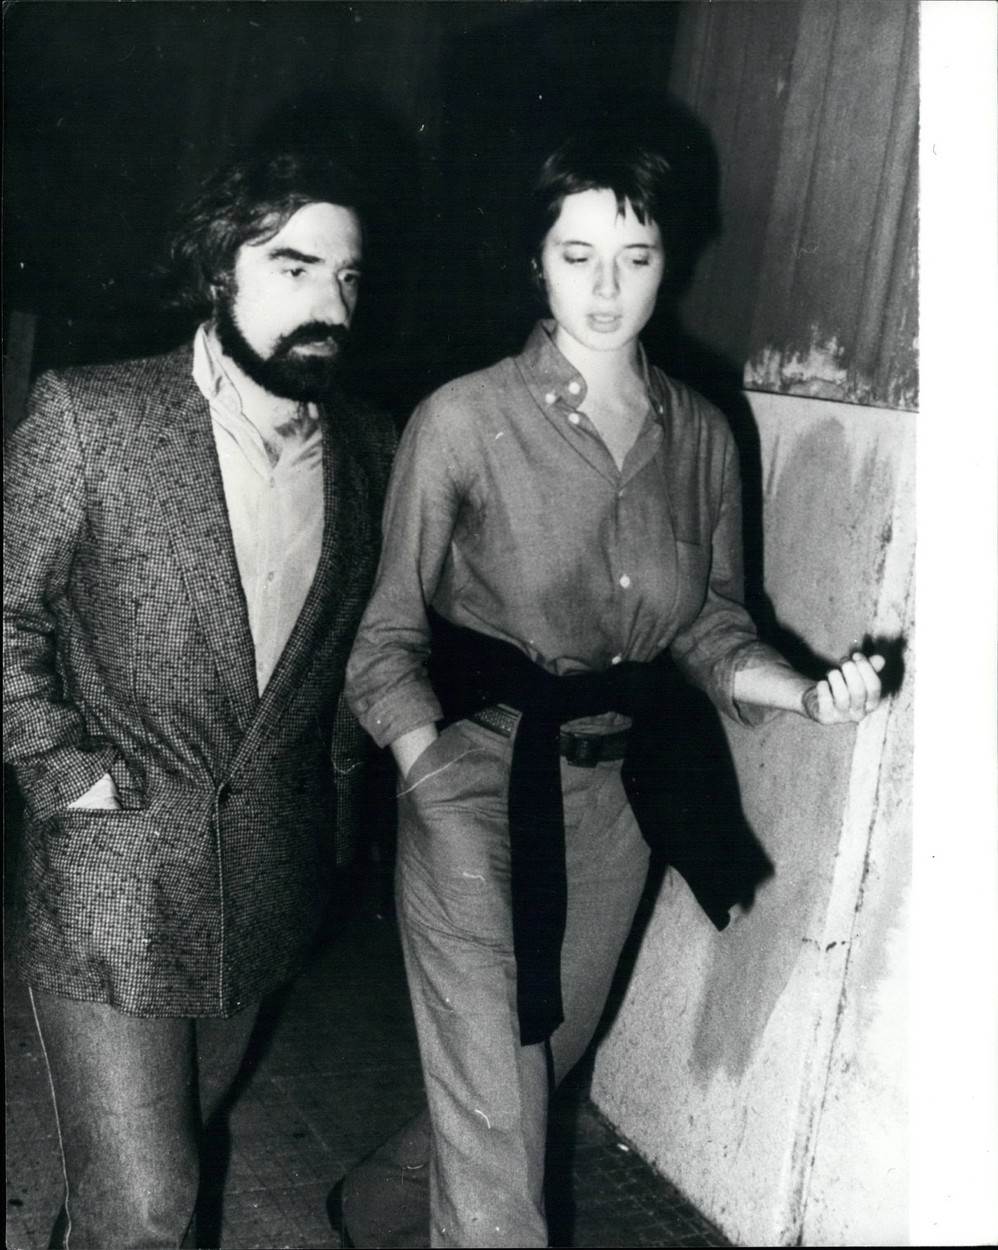 Isabella Rossellini i Martin Scorsese su bili u braku